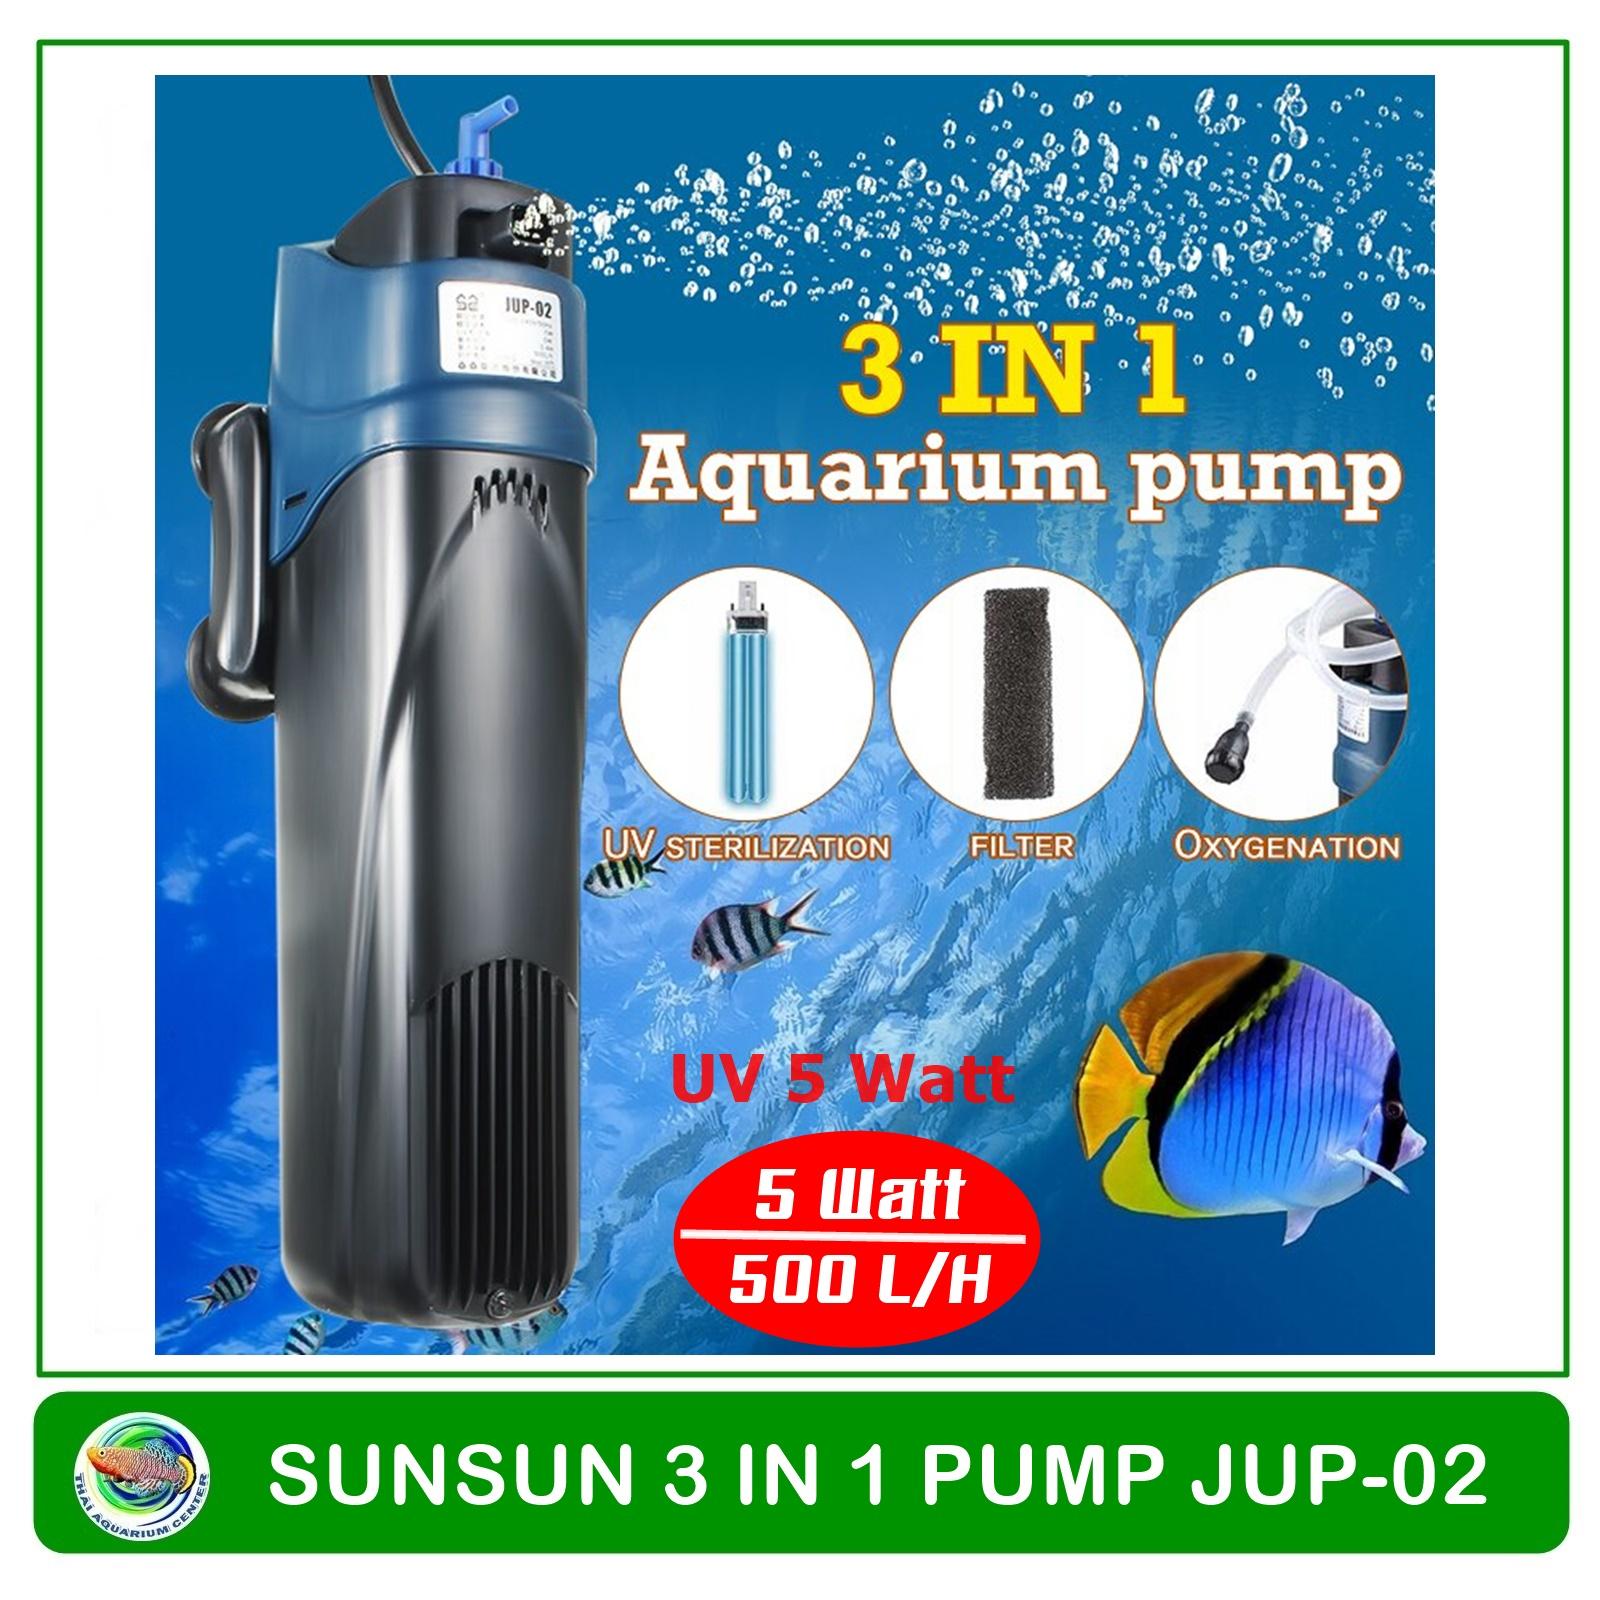 SUNSUN Filtration Pump JUP-02 UV 5 Wattปั้มน้ำพร้อมระบบกรองและหลอด UV ฆ่าเชื้อโรค